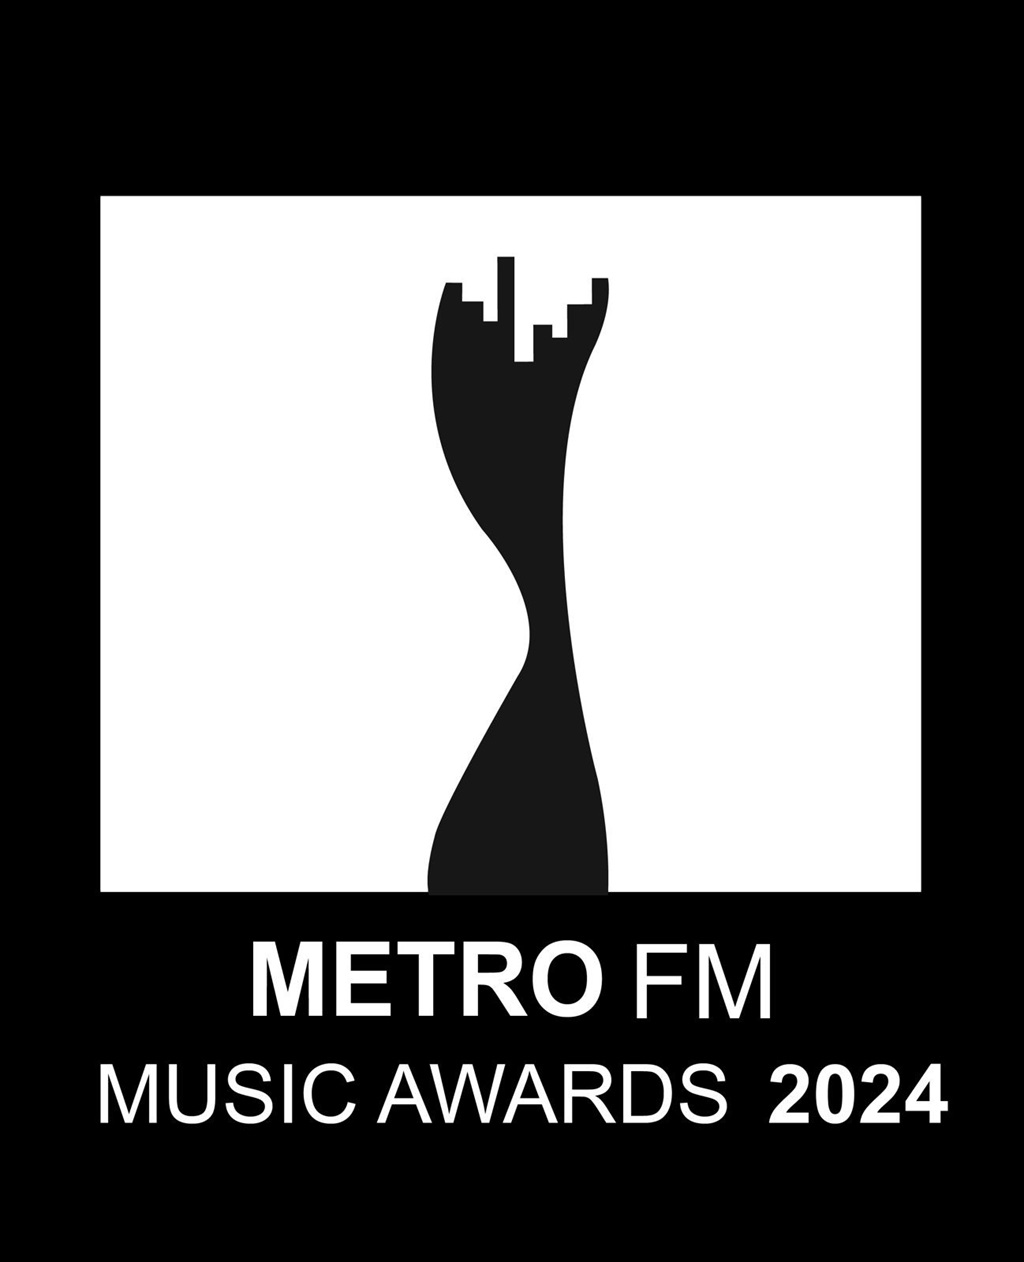 The Metro FM awards were held on Saturday at the Mbombela Stadium in Mpumalanga. 